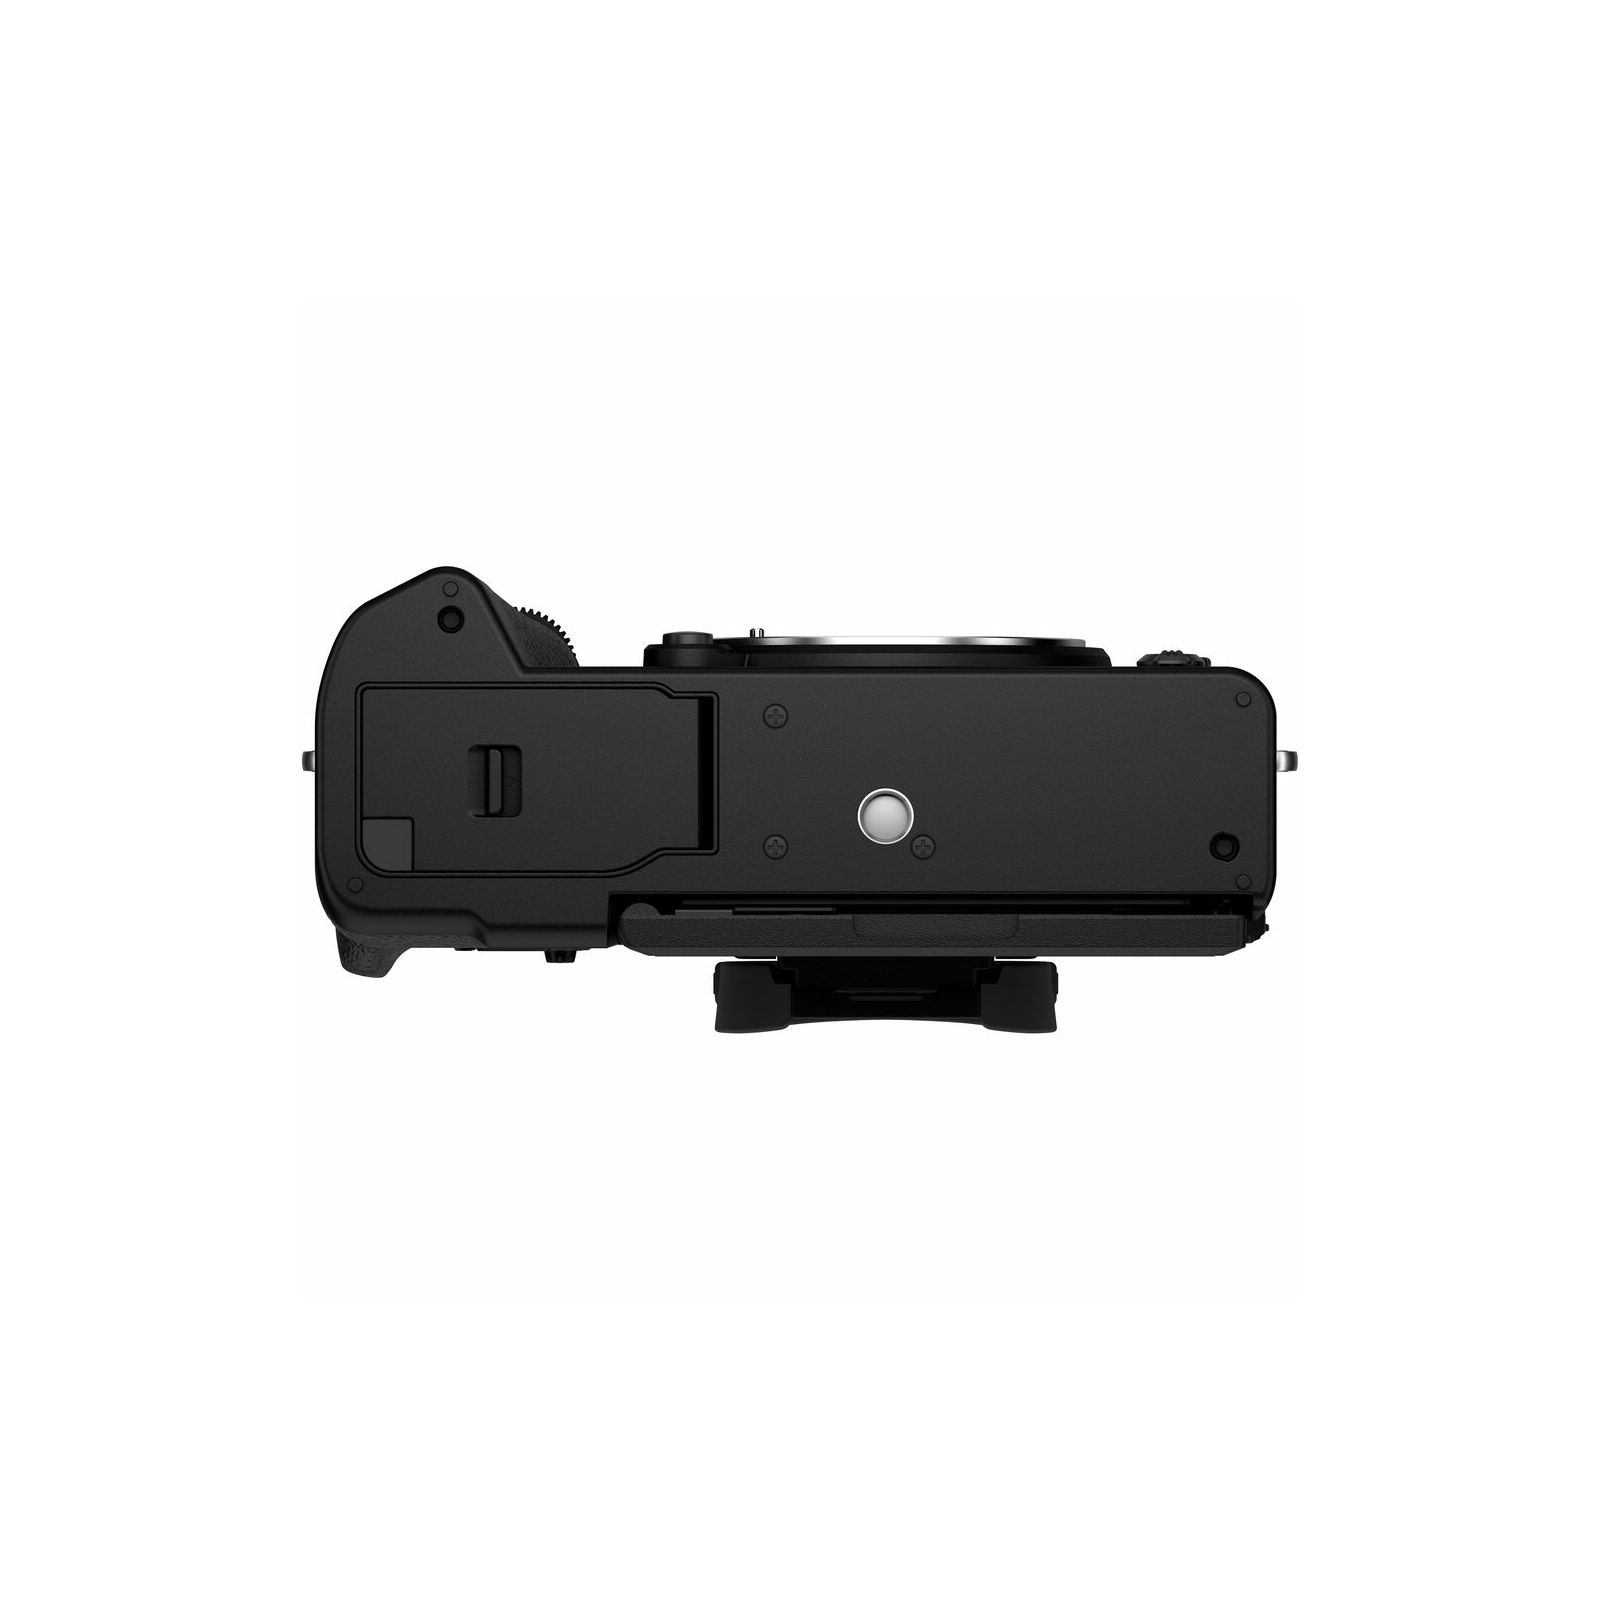 Fujifilm X-T5 Body Black Fuji digitalni mirrorless fotoaparat